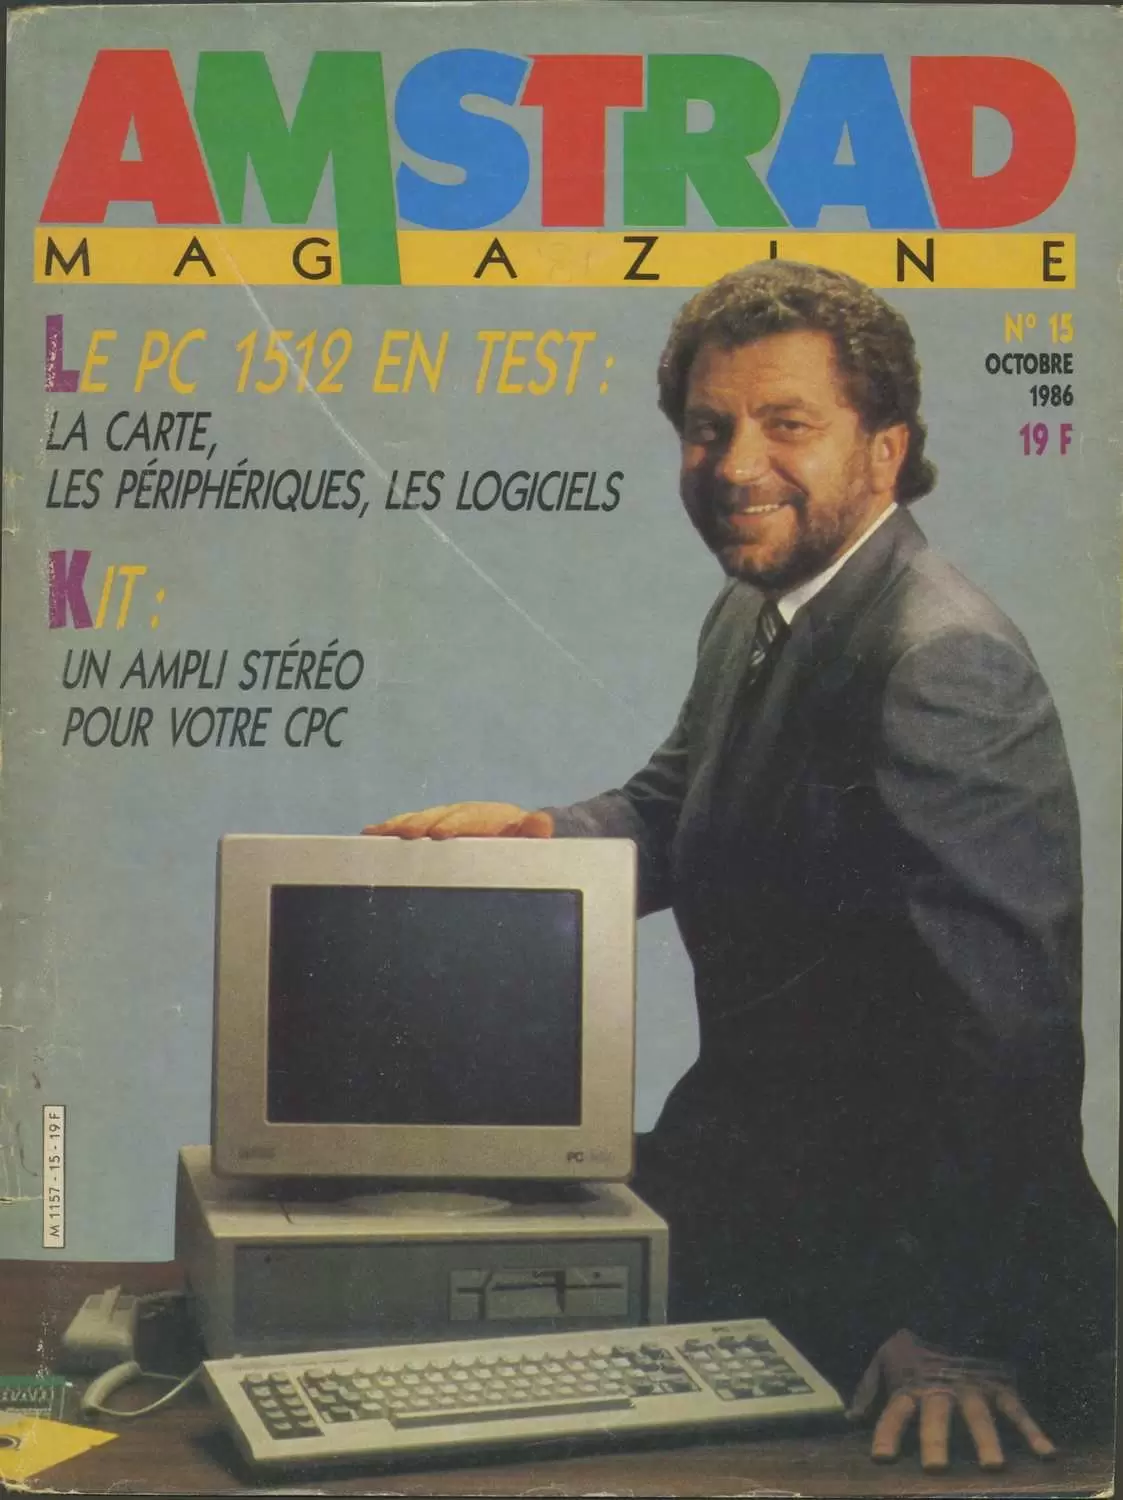 Amstrad Magazine - Amstrad Magazine n°15